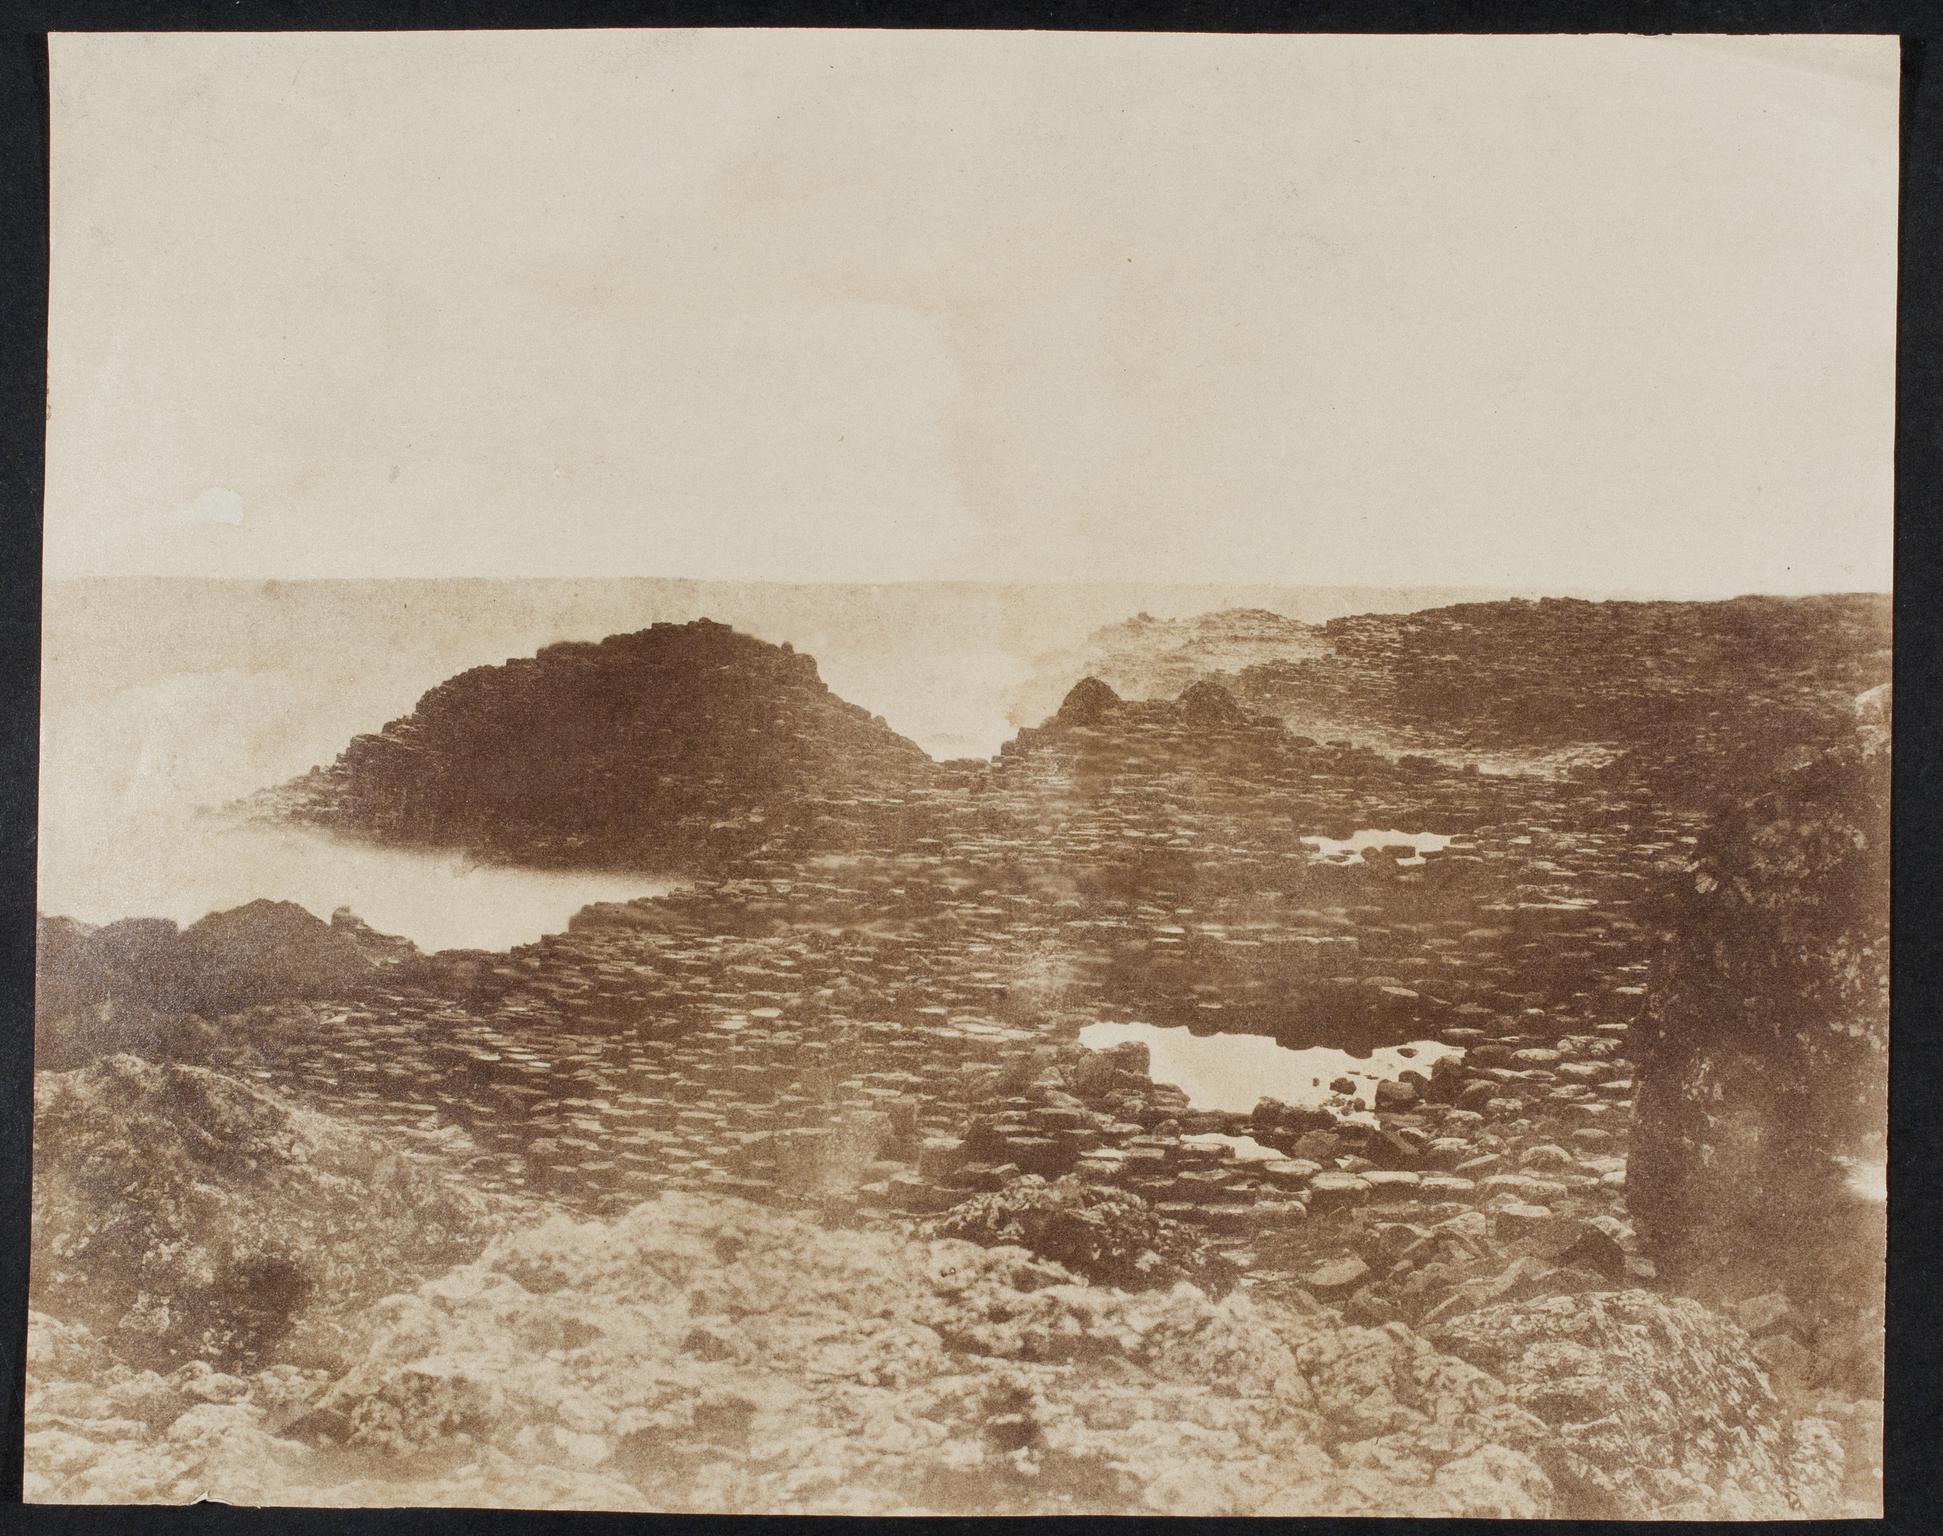 Rocks and sea, photograph